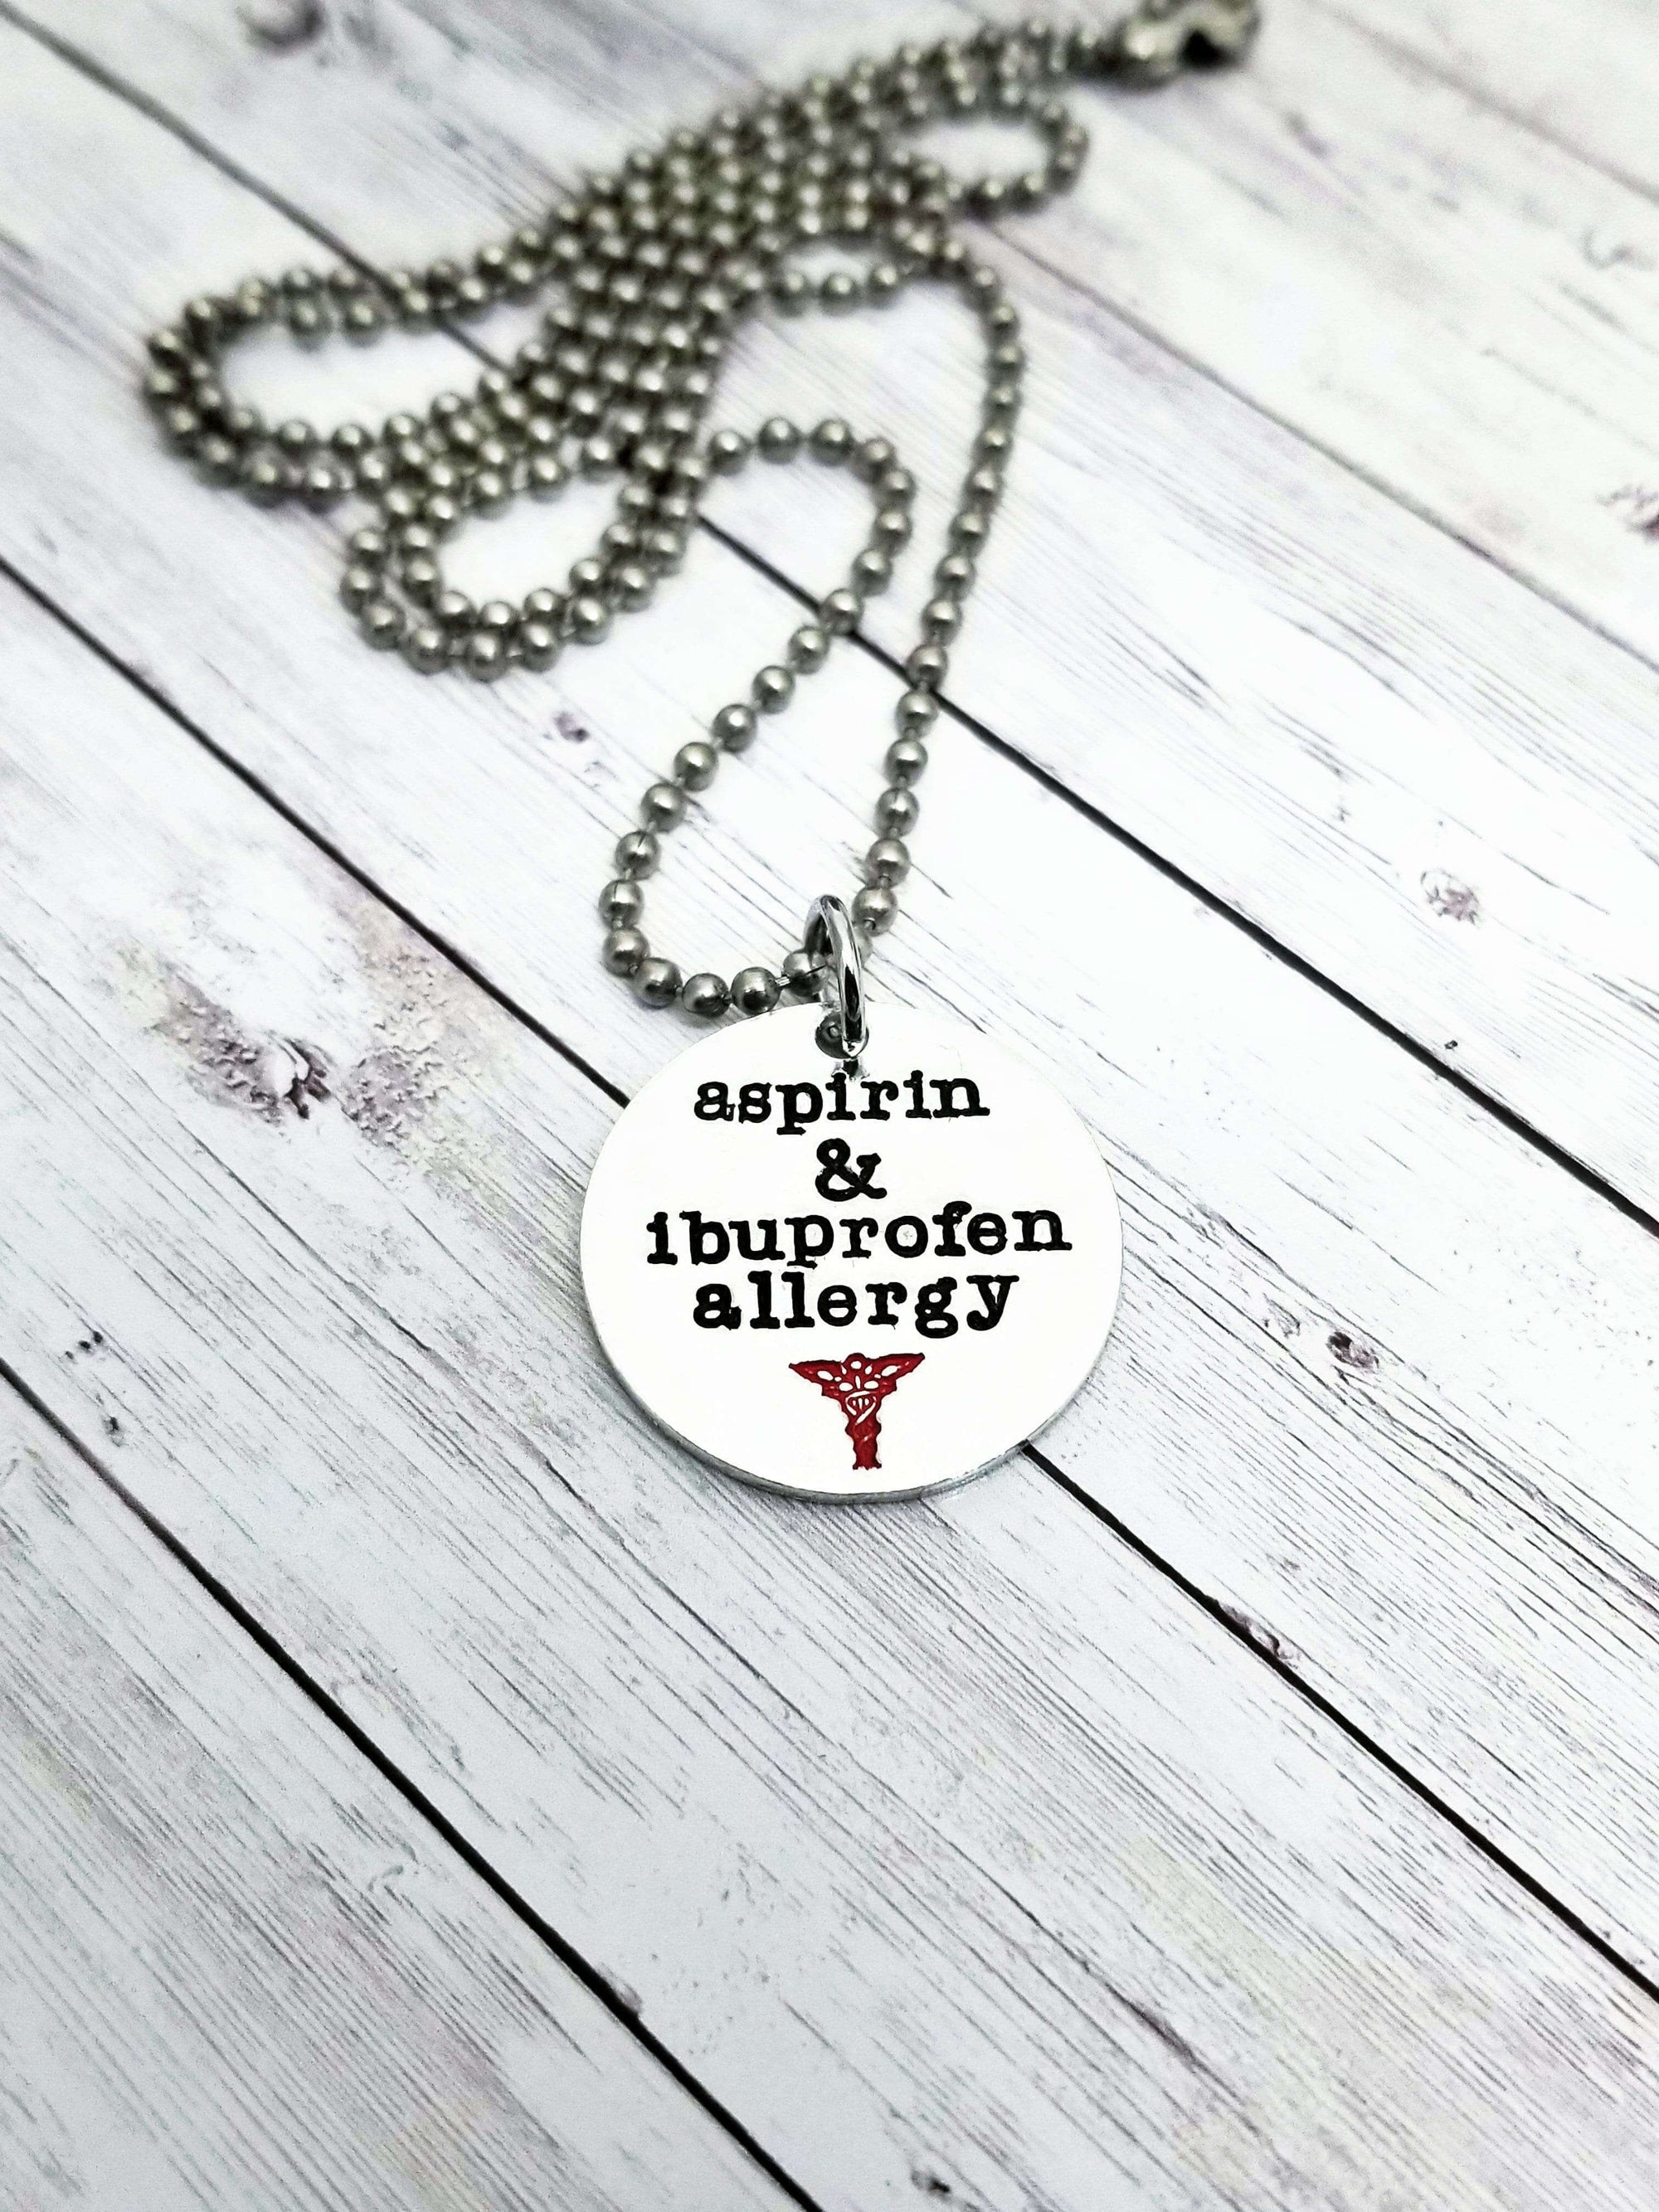 Medicine Allergy Necklace, Medicine Allergy Warning, Allergic to Medicine, Medical Alert, Allergies